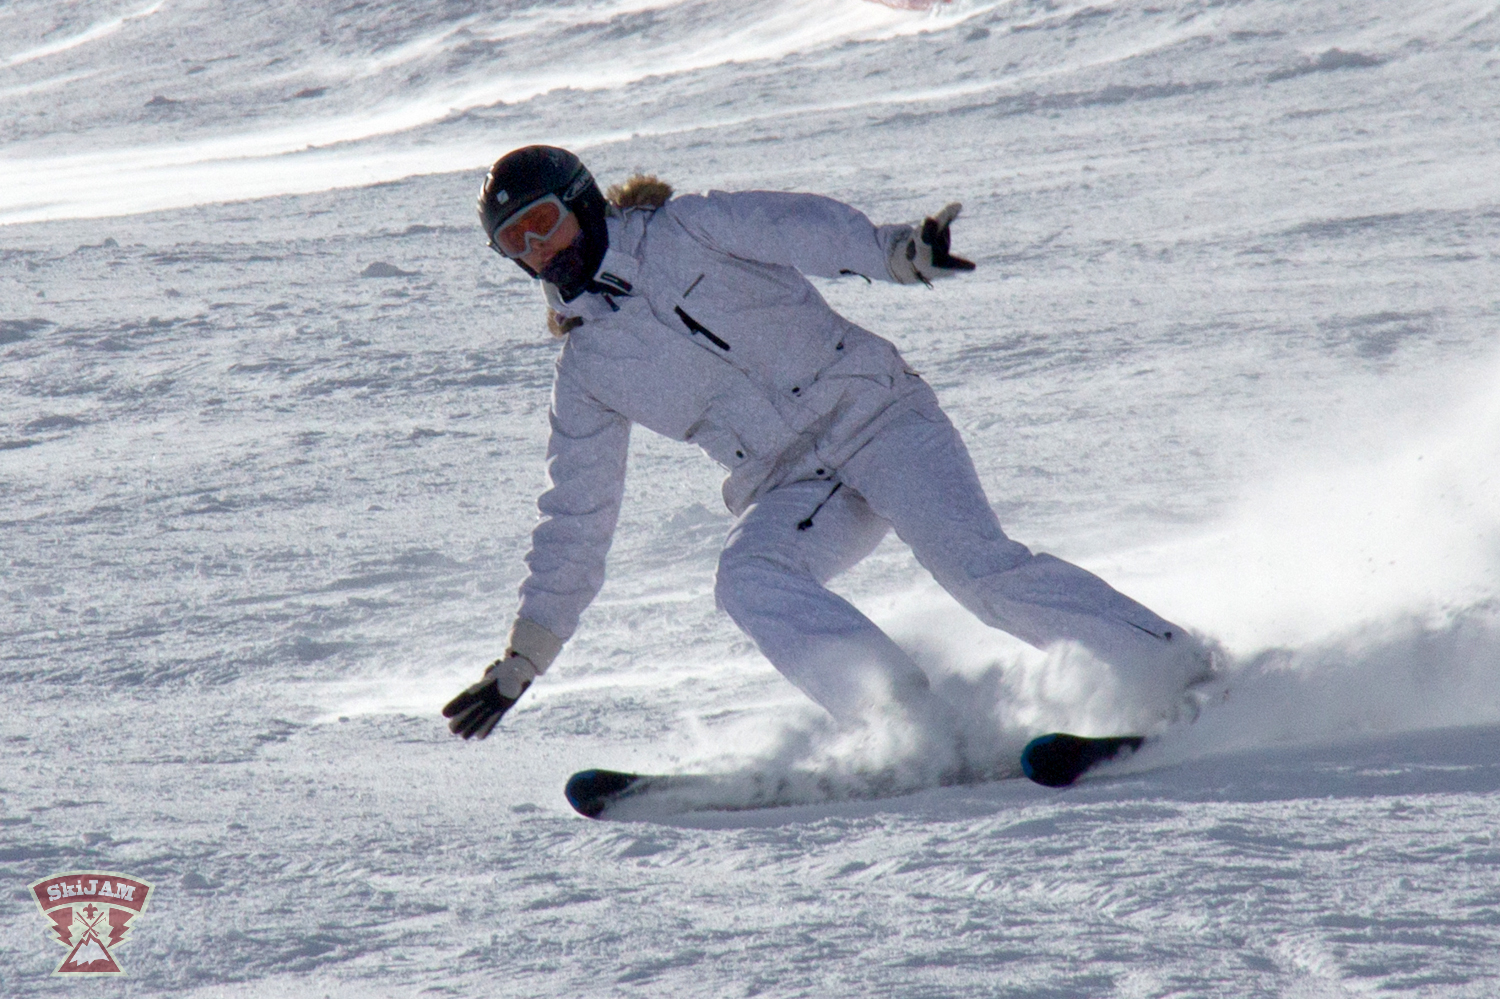 2013-skijam-havasi-mate-020.jpg